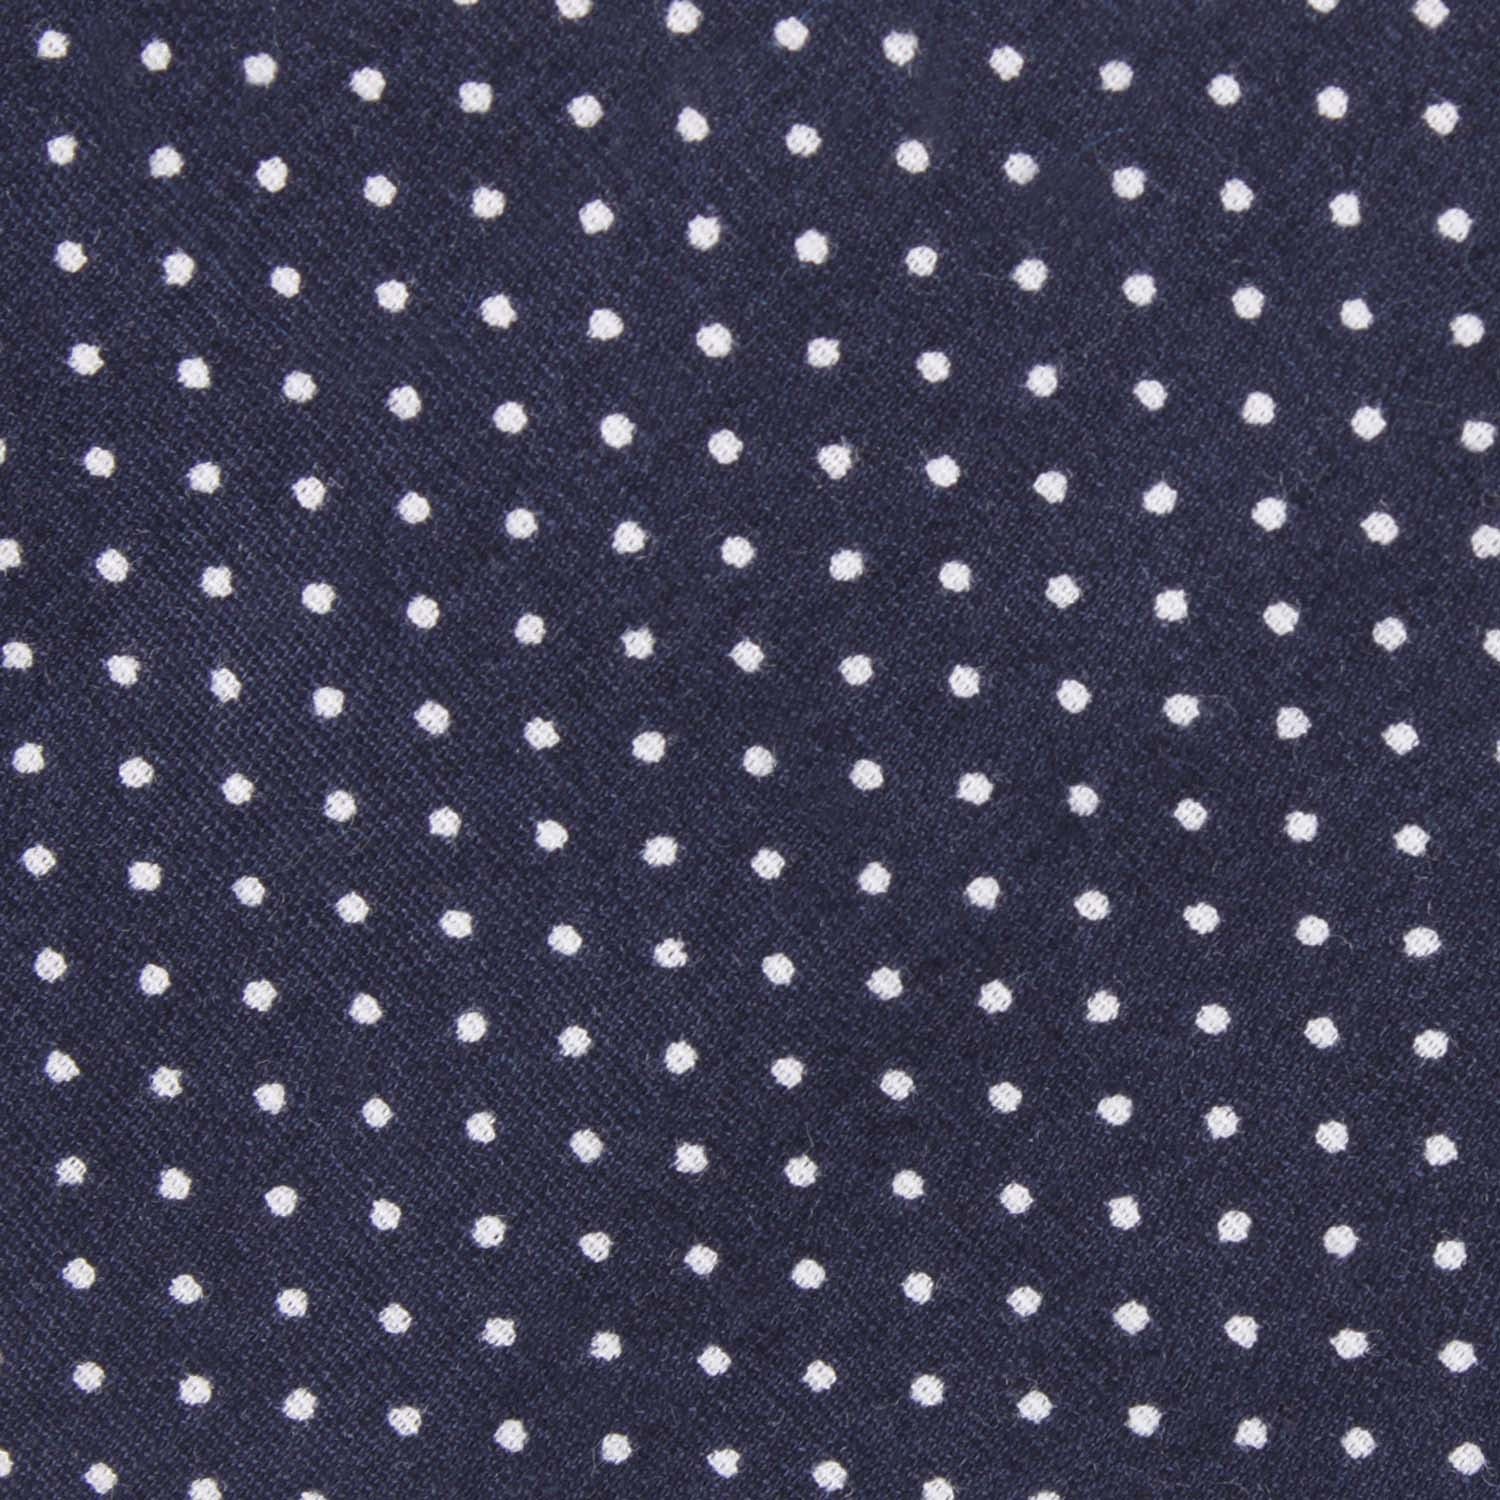 Navy Blue Cotton with White Mini Polka Dots Fabric Necktie C154